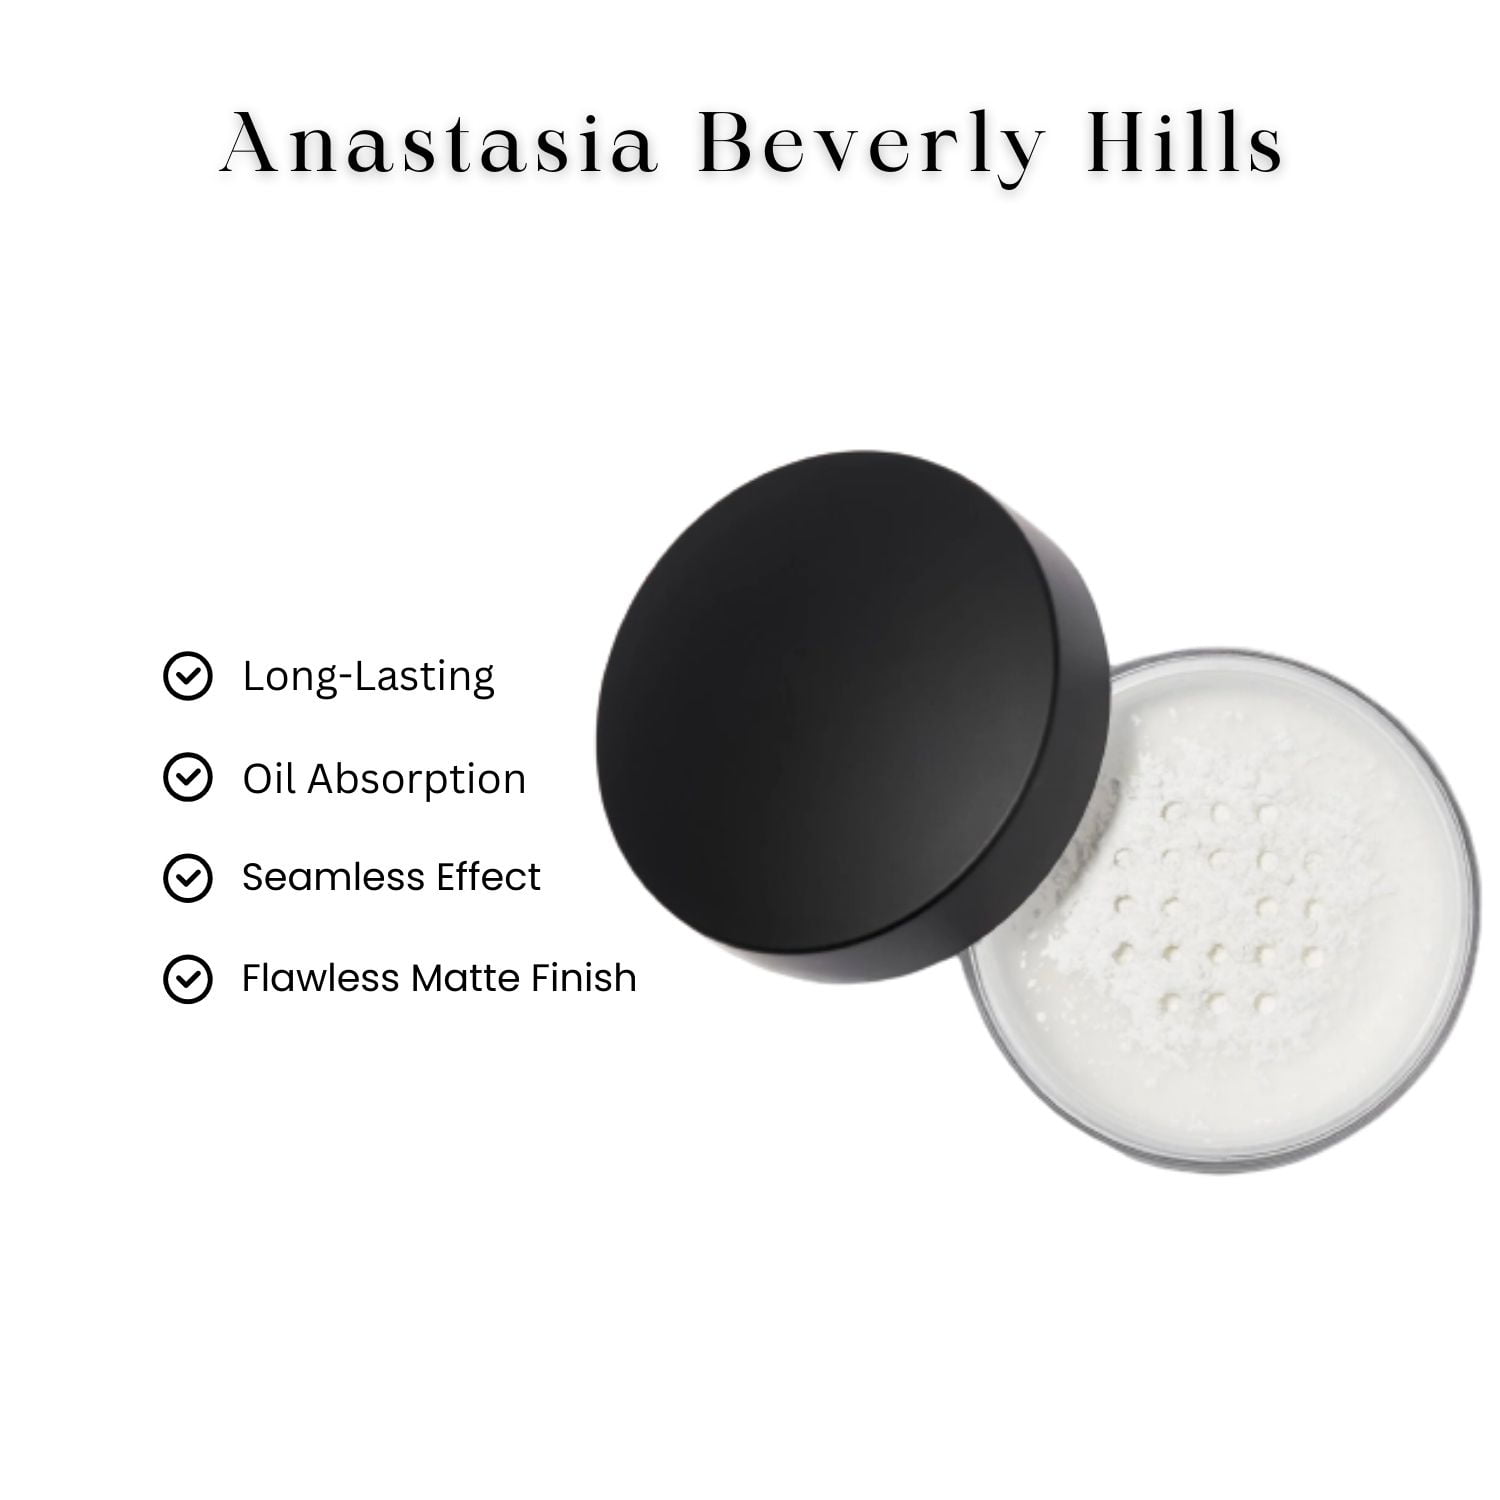 Hills Beverly - by Women - for Anastasia Powder oz Powder 0.9 Setting Vanilla Loose